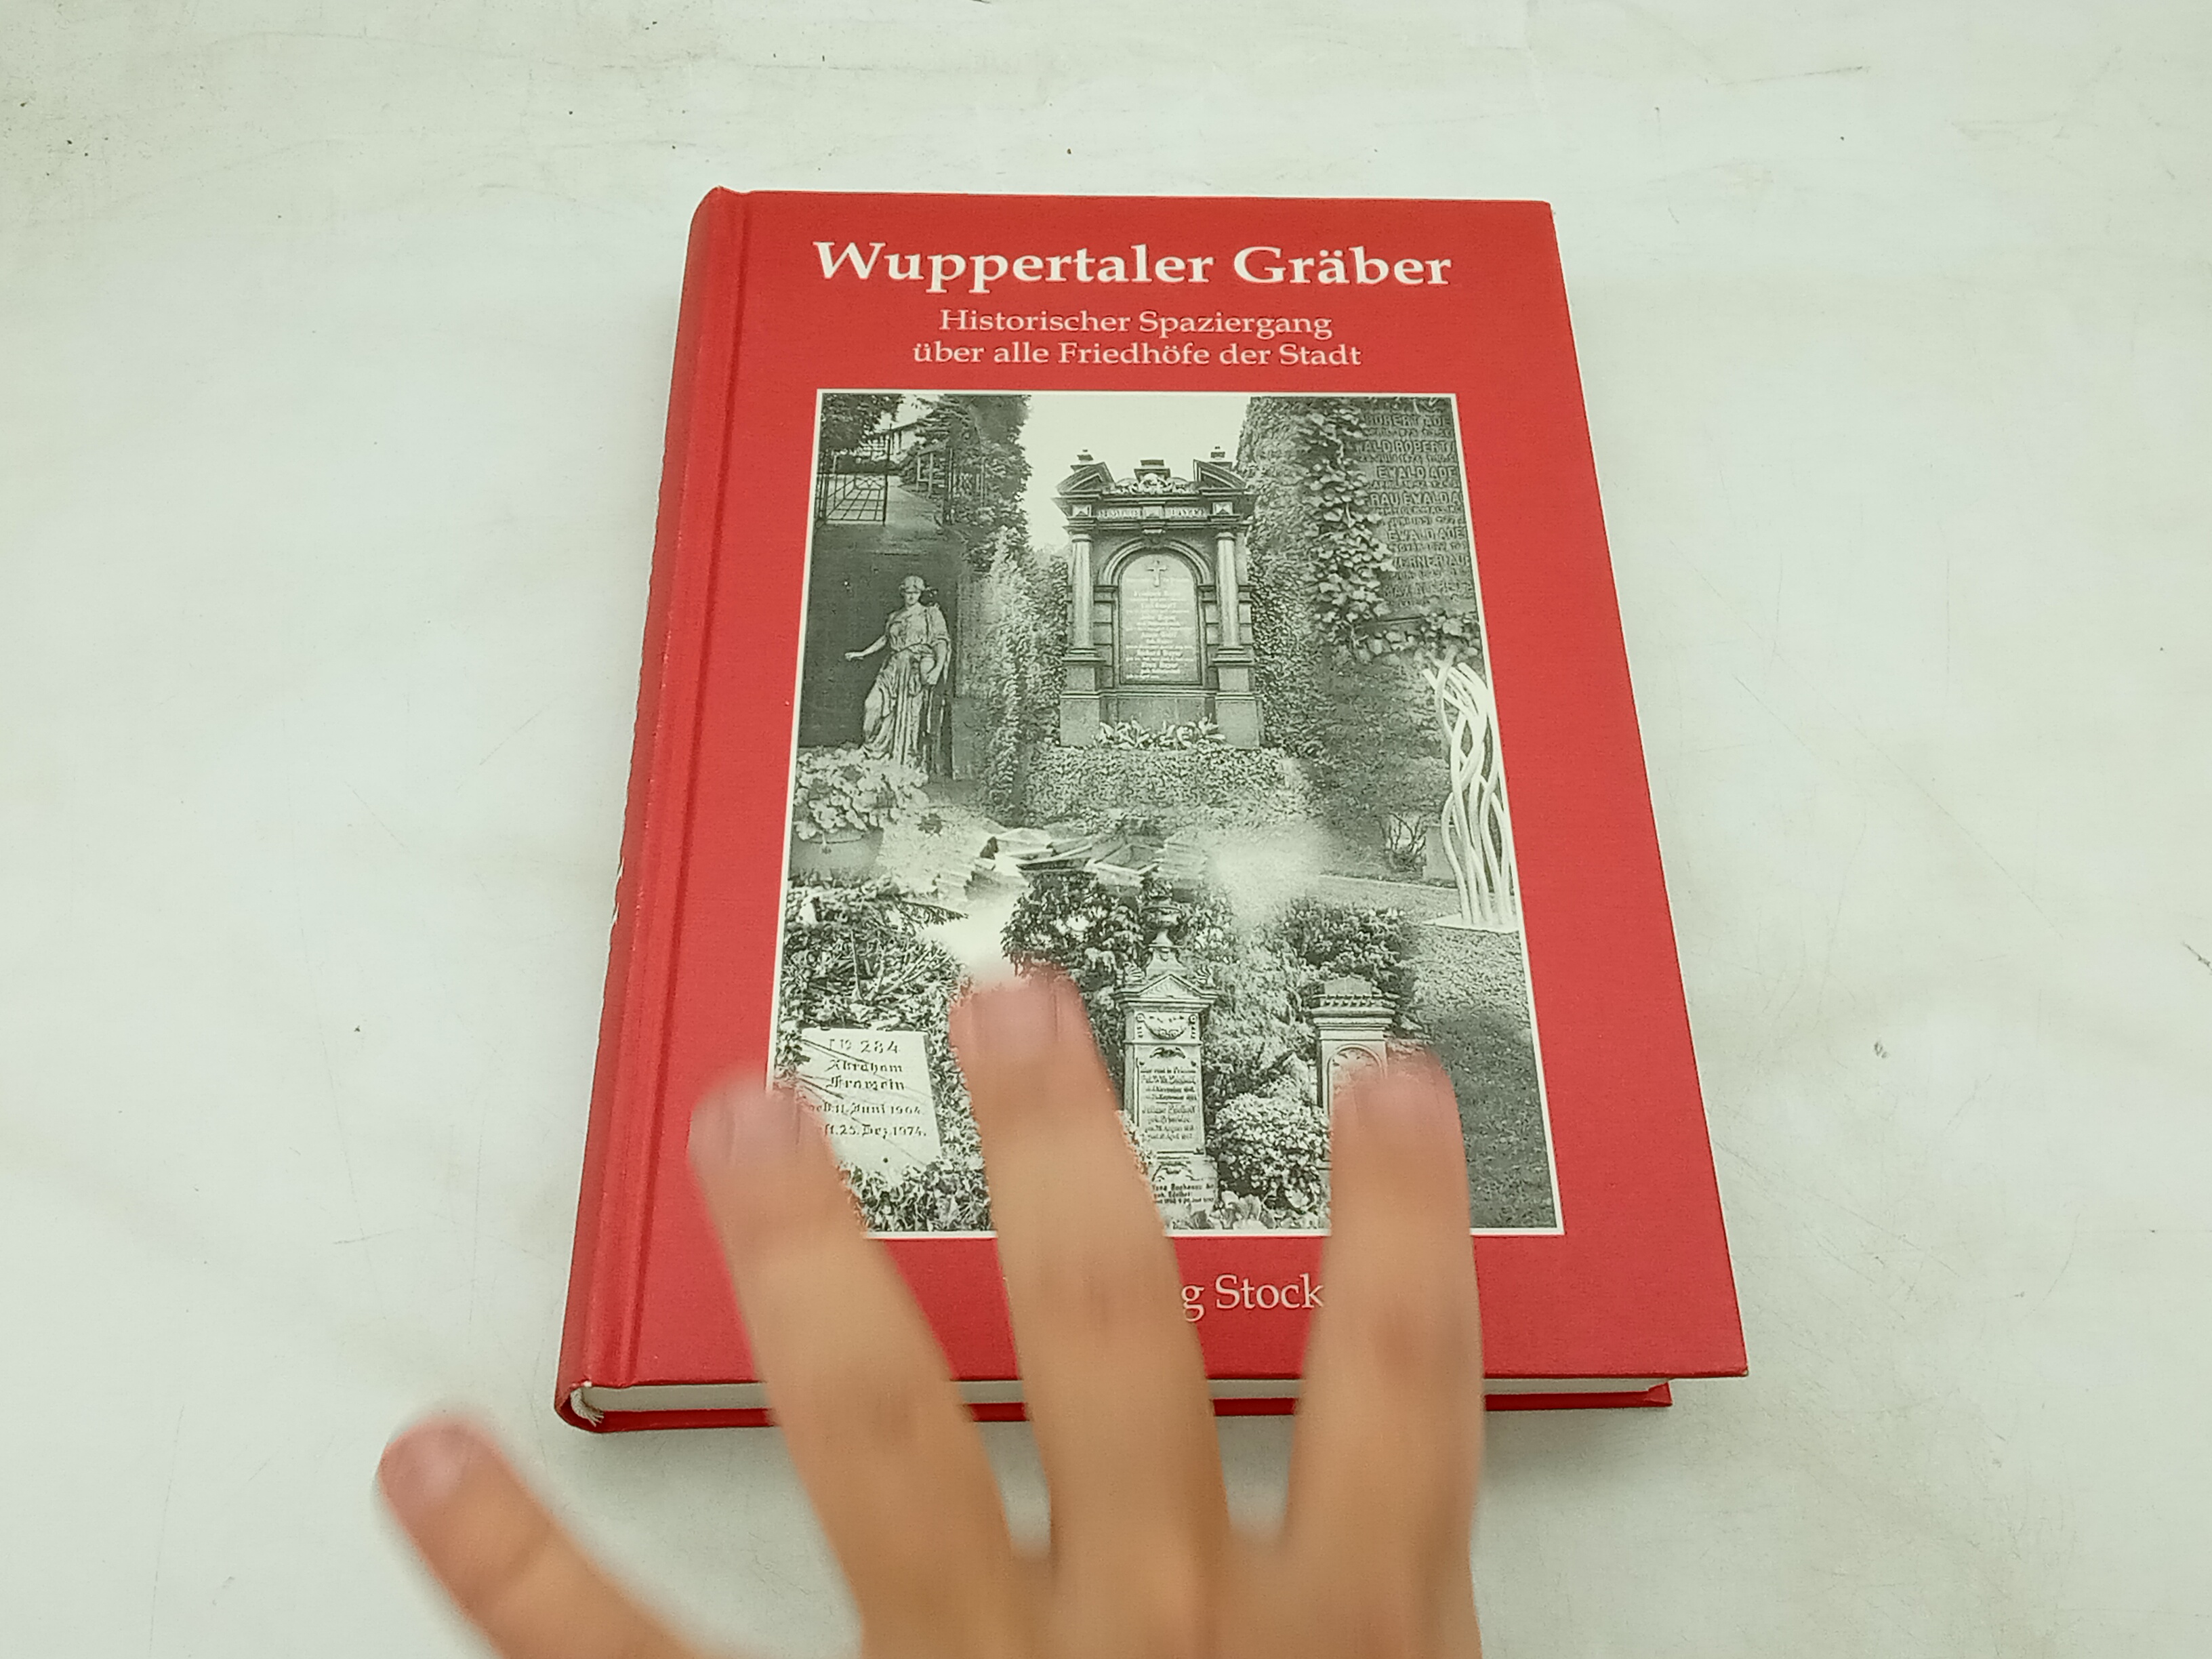 Wuppertaler Gräber: Historischer Spaziergang über alle Wuppertaler Friedhöfe - Stock, Wolfgang